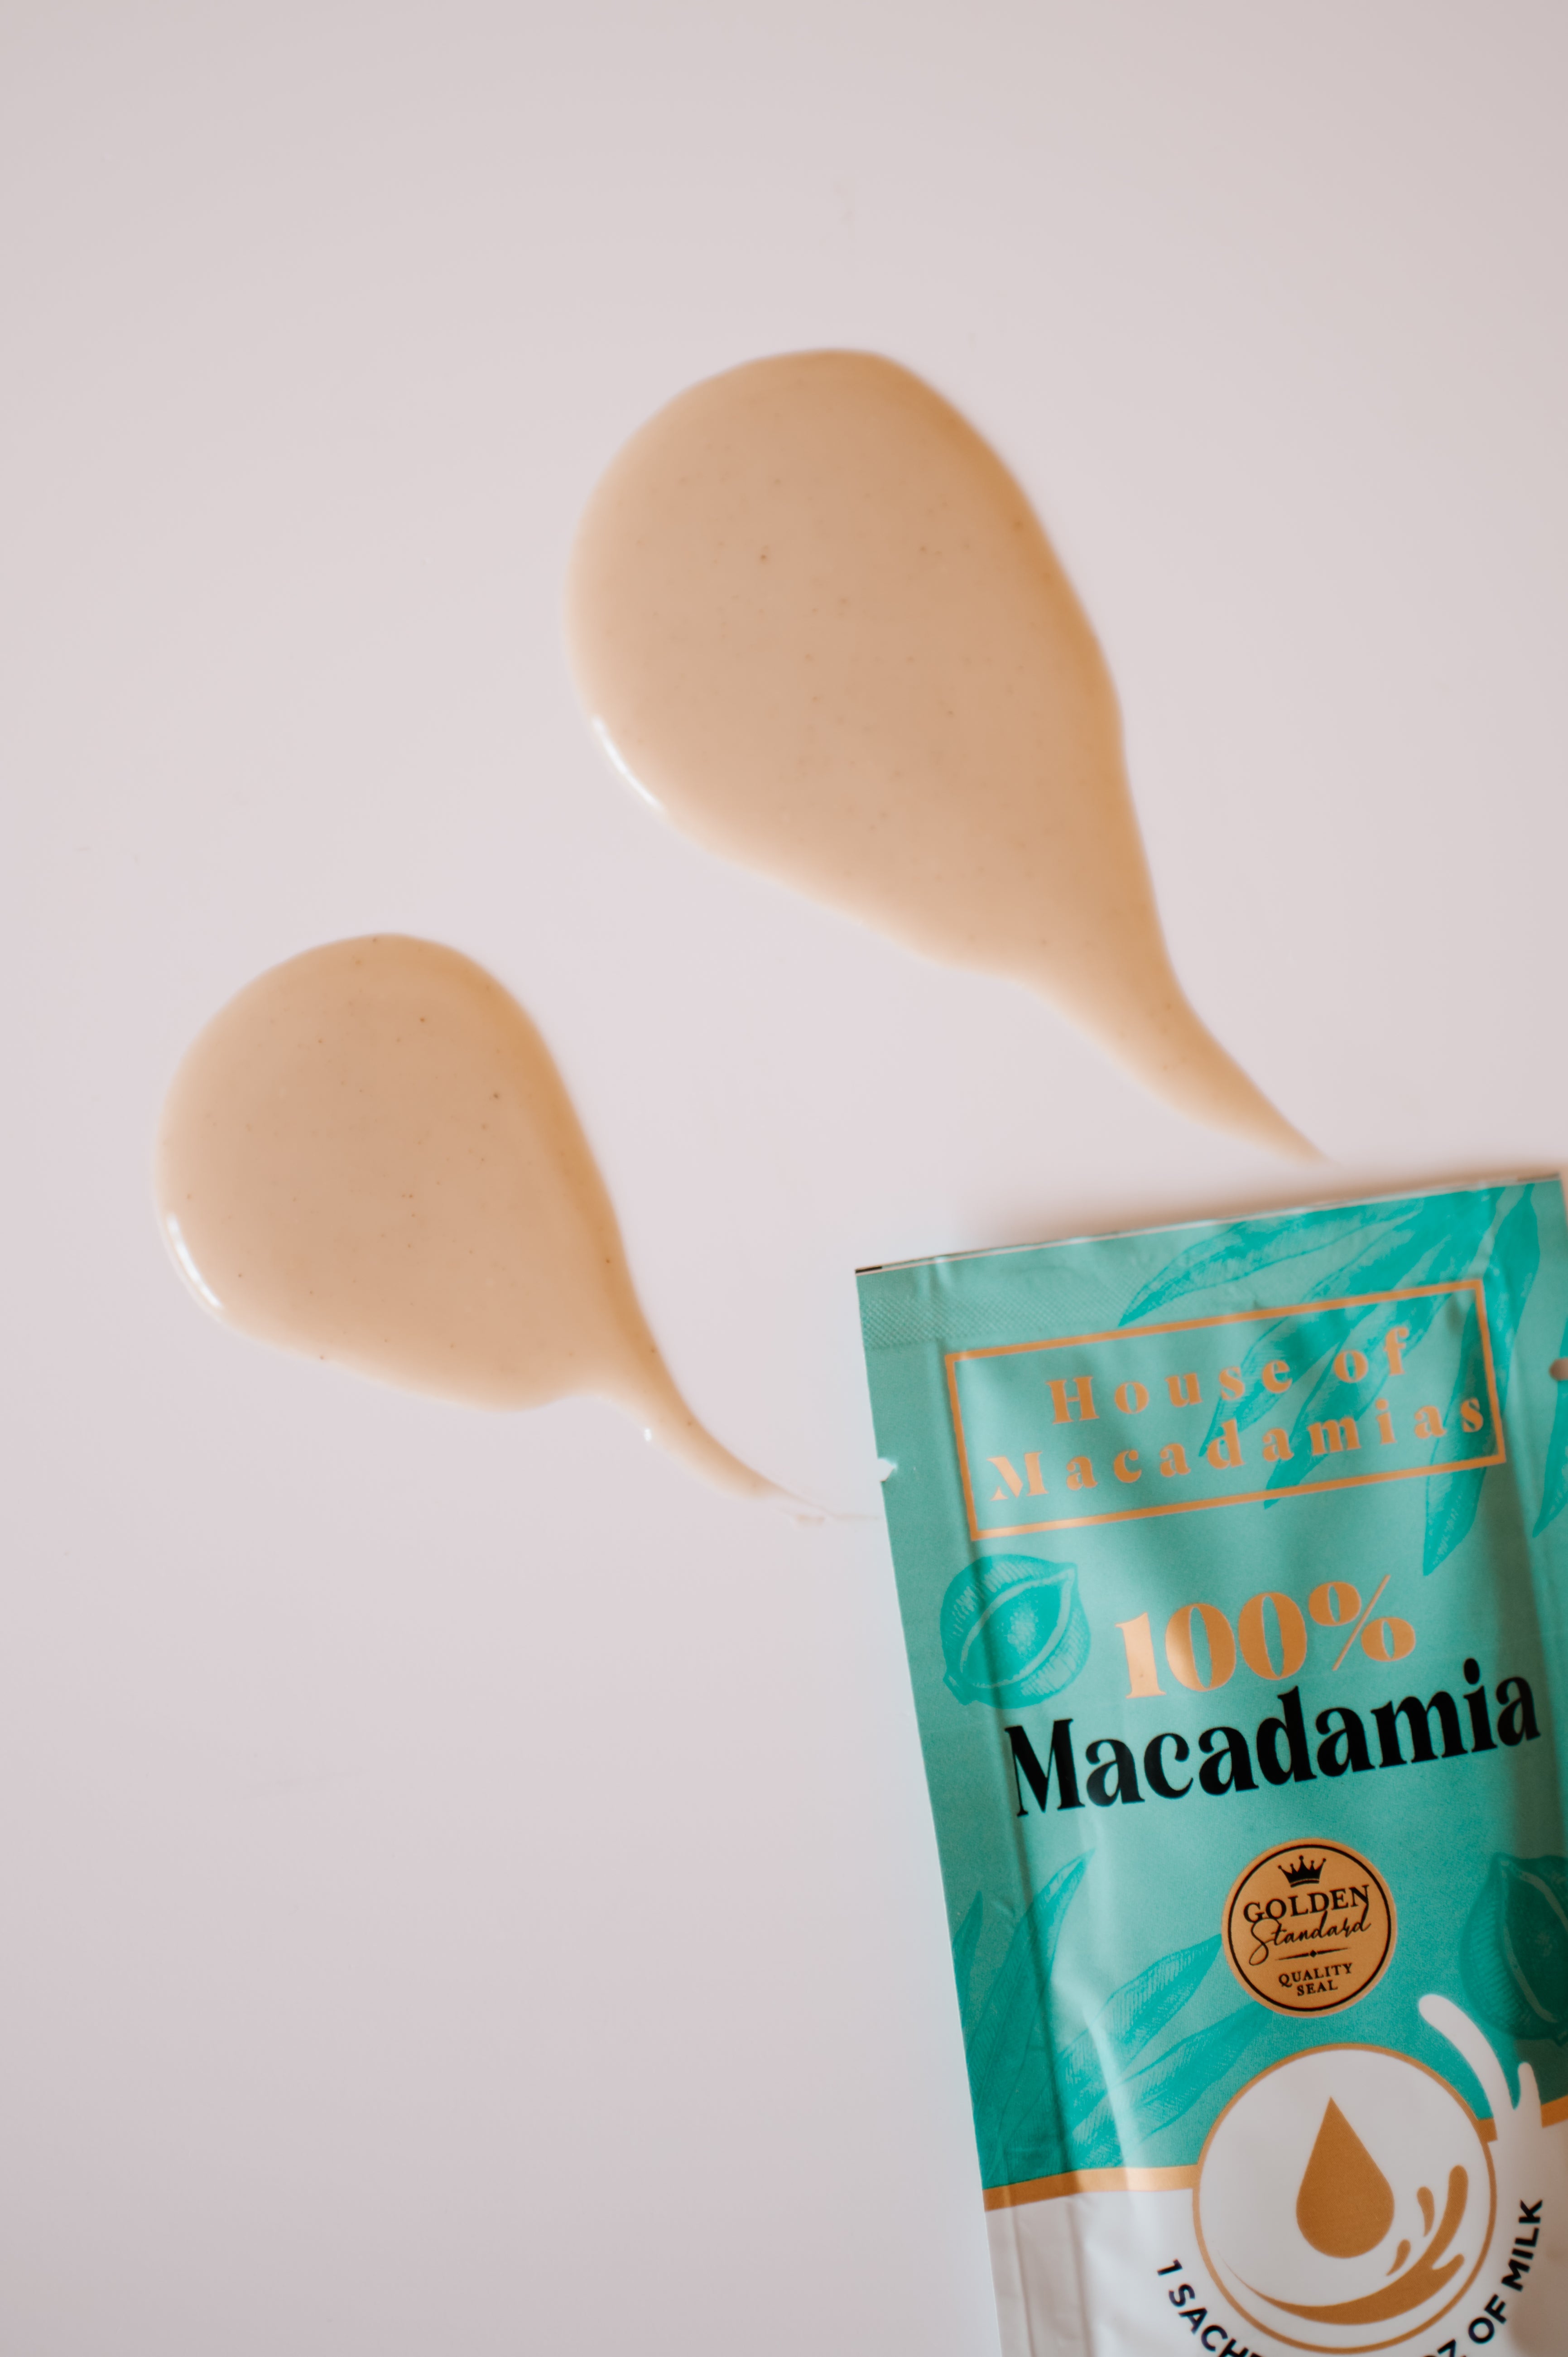 Exclusive Offer - 100% Macadamia Milk (12 Sachets) - House of Macadamias - calories in macadamias